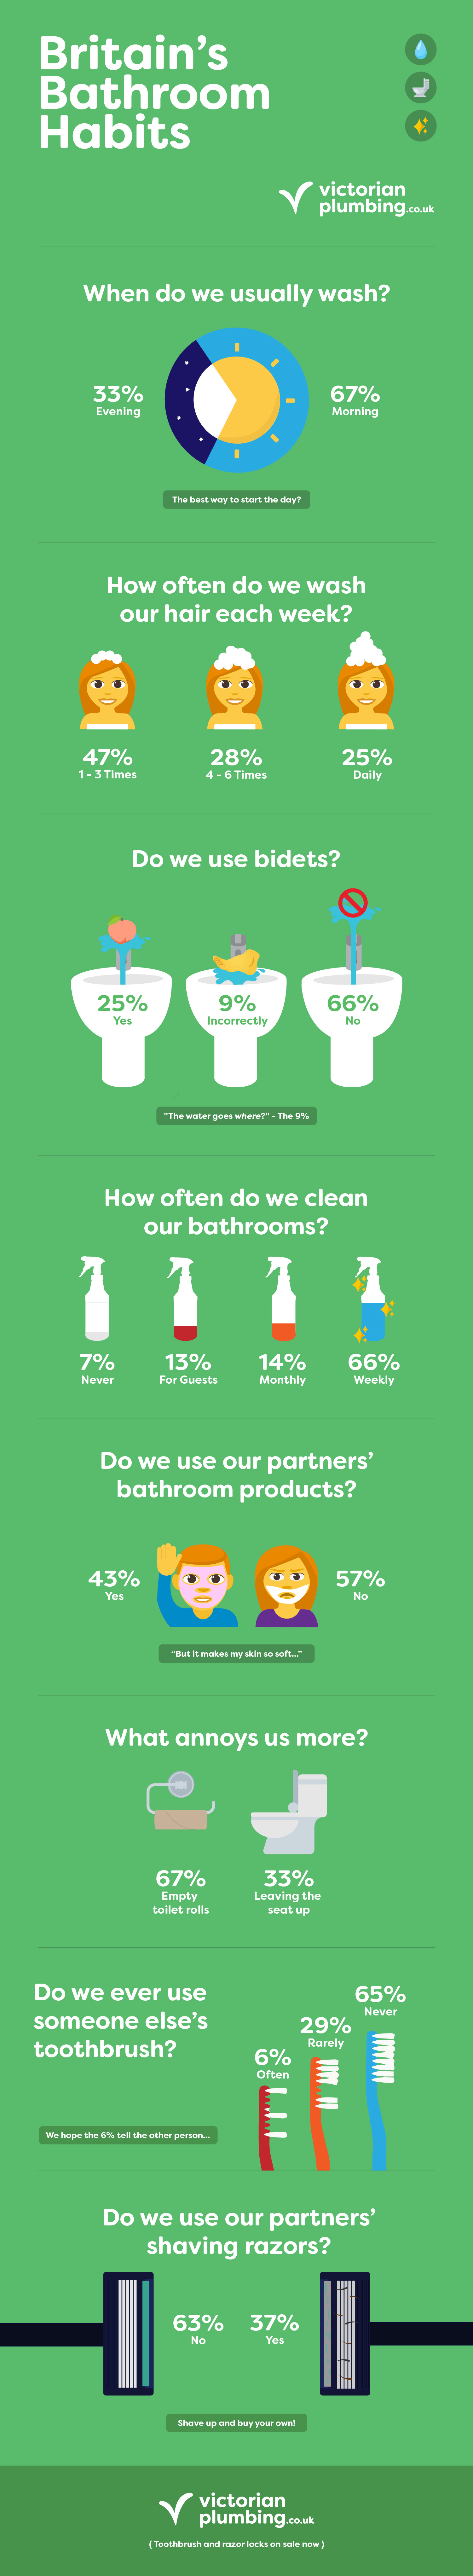 Britain's Bathroom Habits Infographic